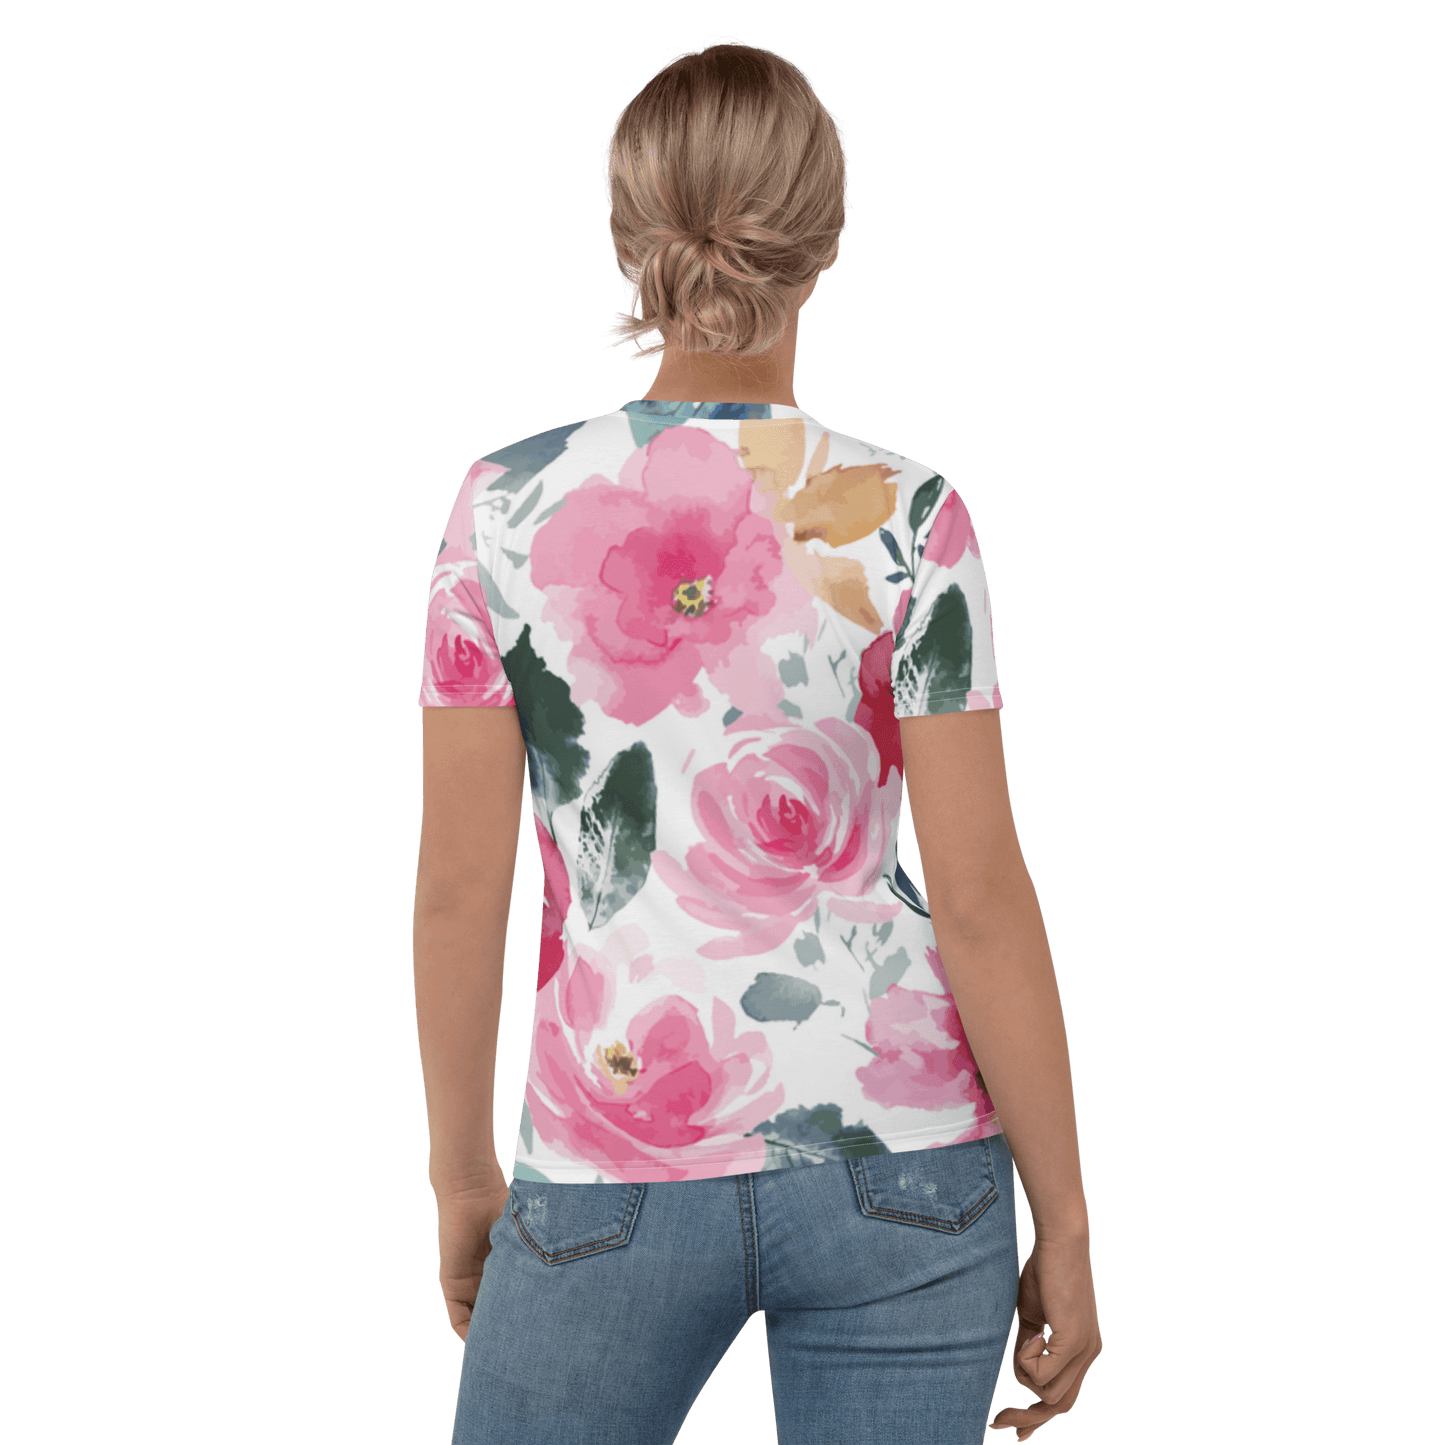 Roses T-shirt - L & M Kee, LLC